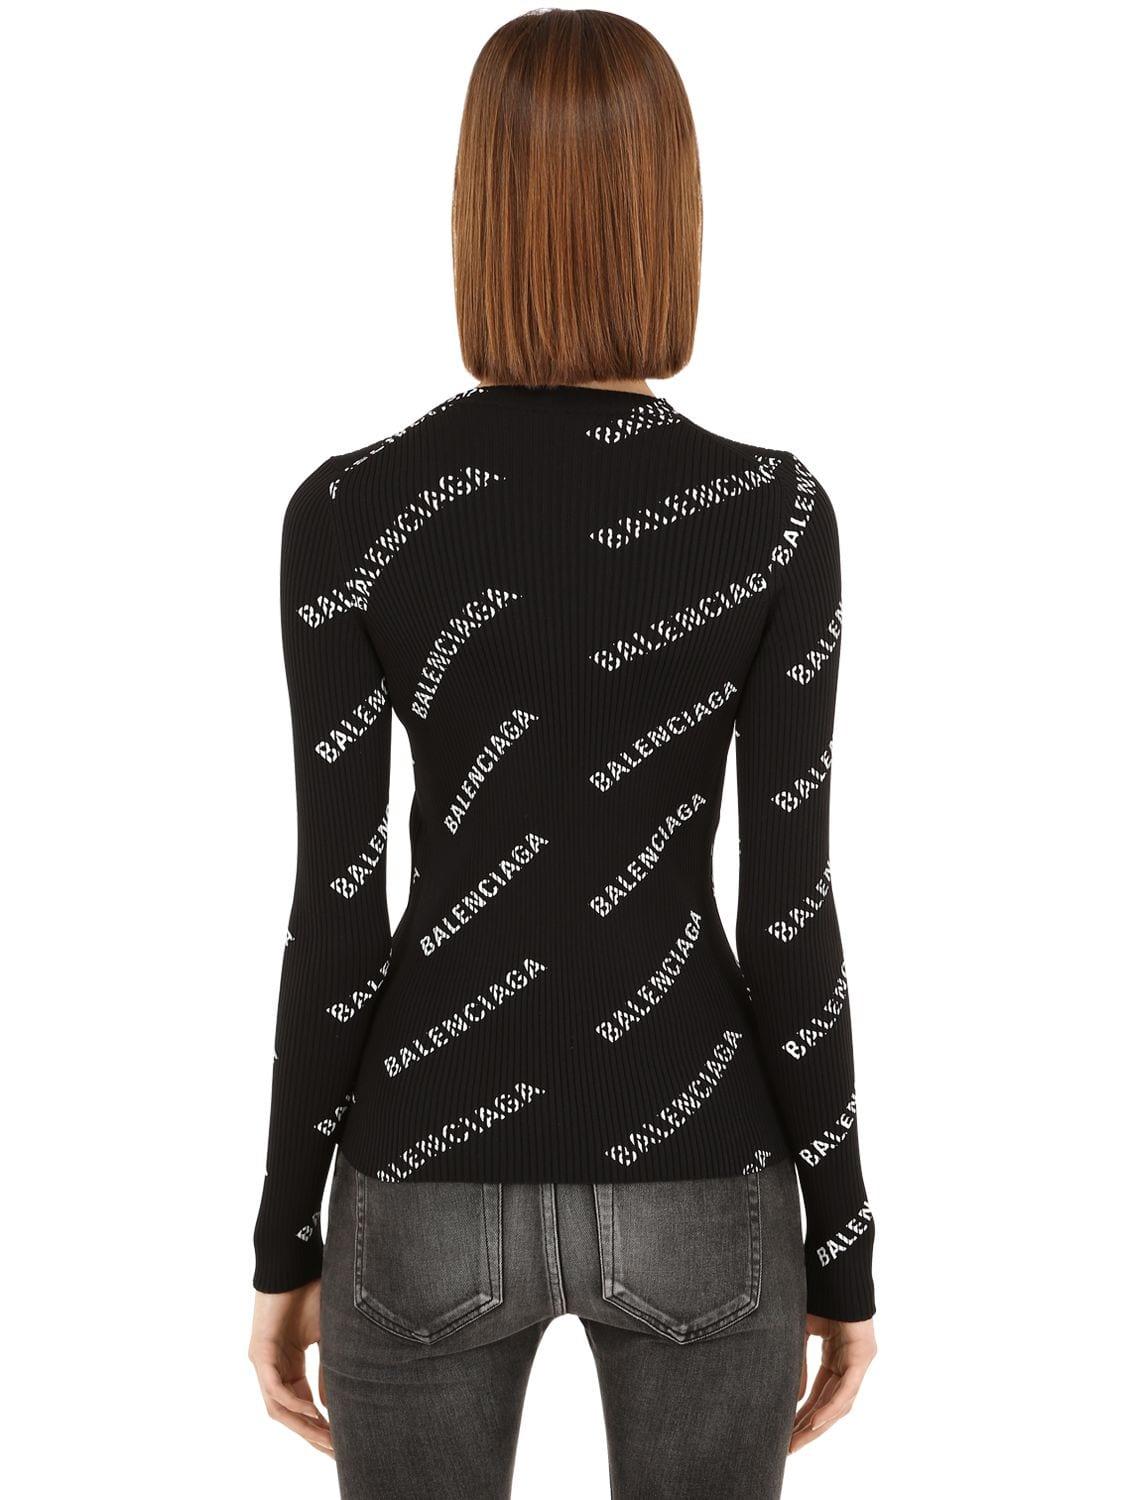 Balenciaga Logo Ribbed Sweater in Black/White (Black) - Save 44% - Lyst